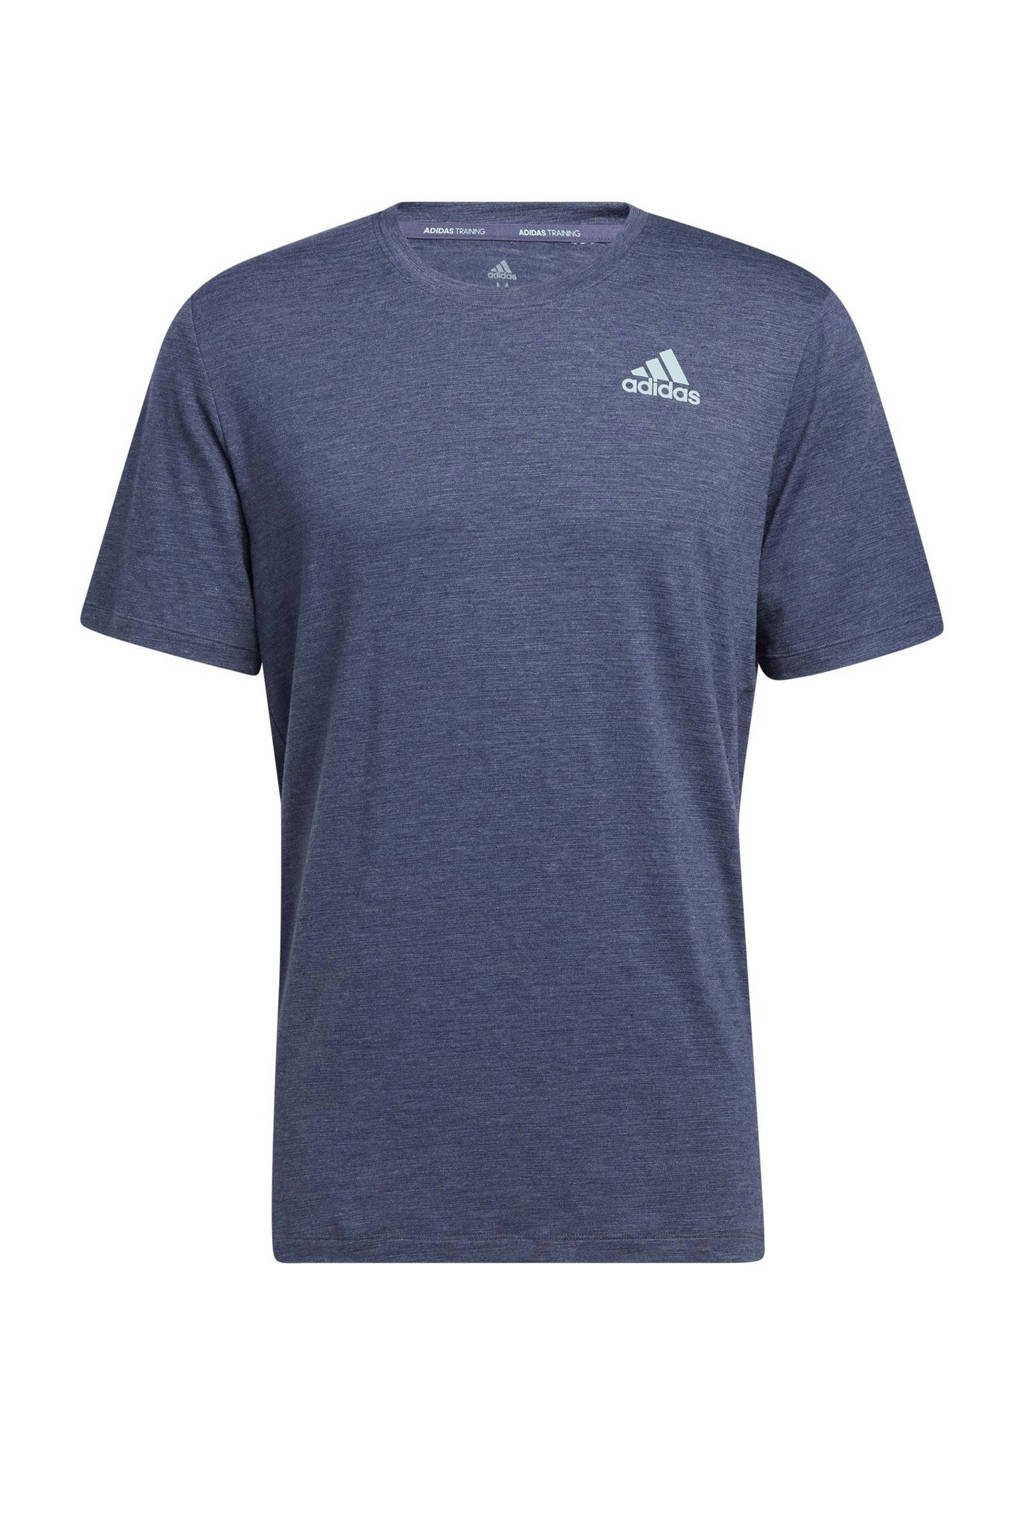 adidas Performance   sport T-shirt donkerblauw/grijsblauw